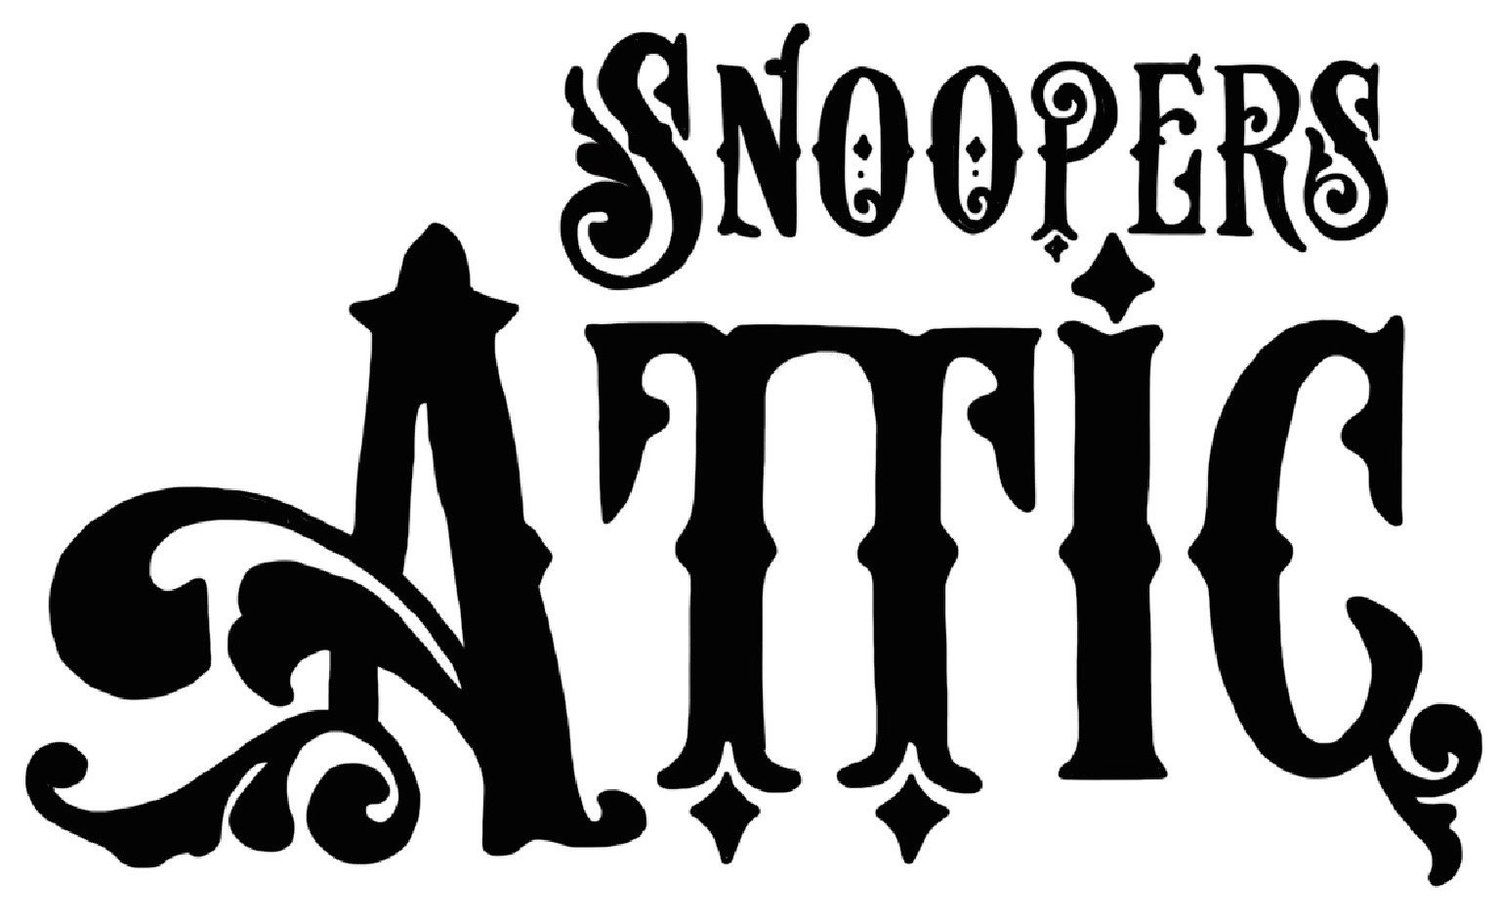 Snoopers Attic